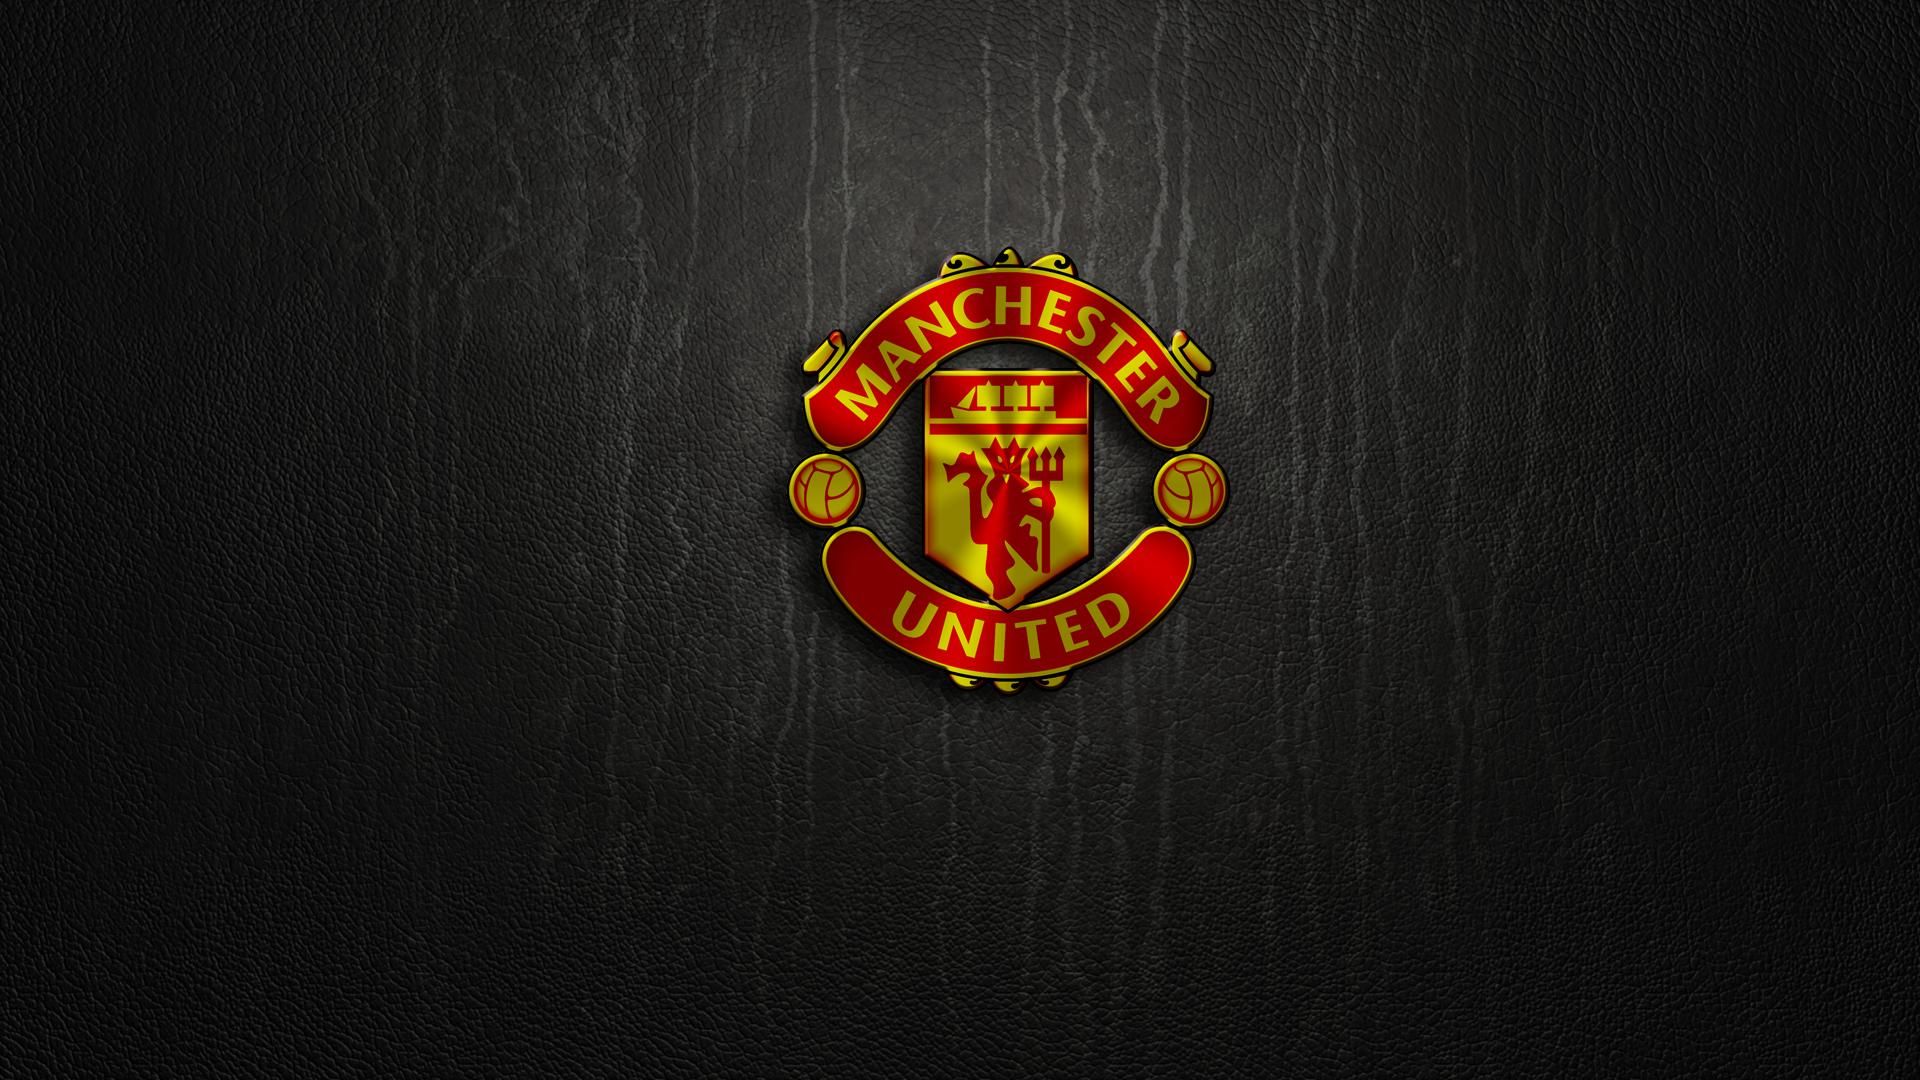 Wallpaper Manchester United Hd Logo